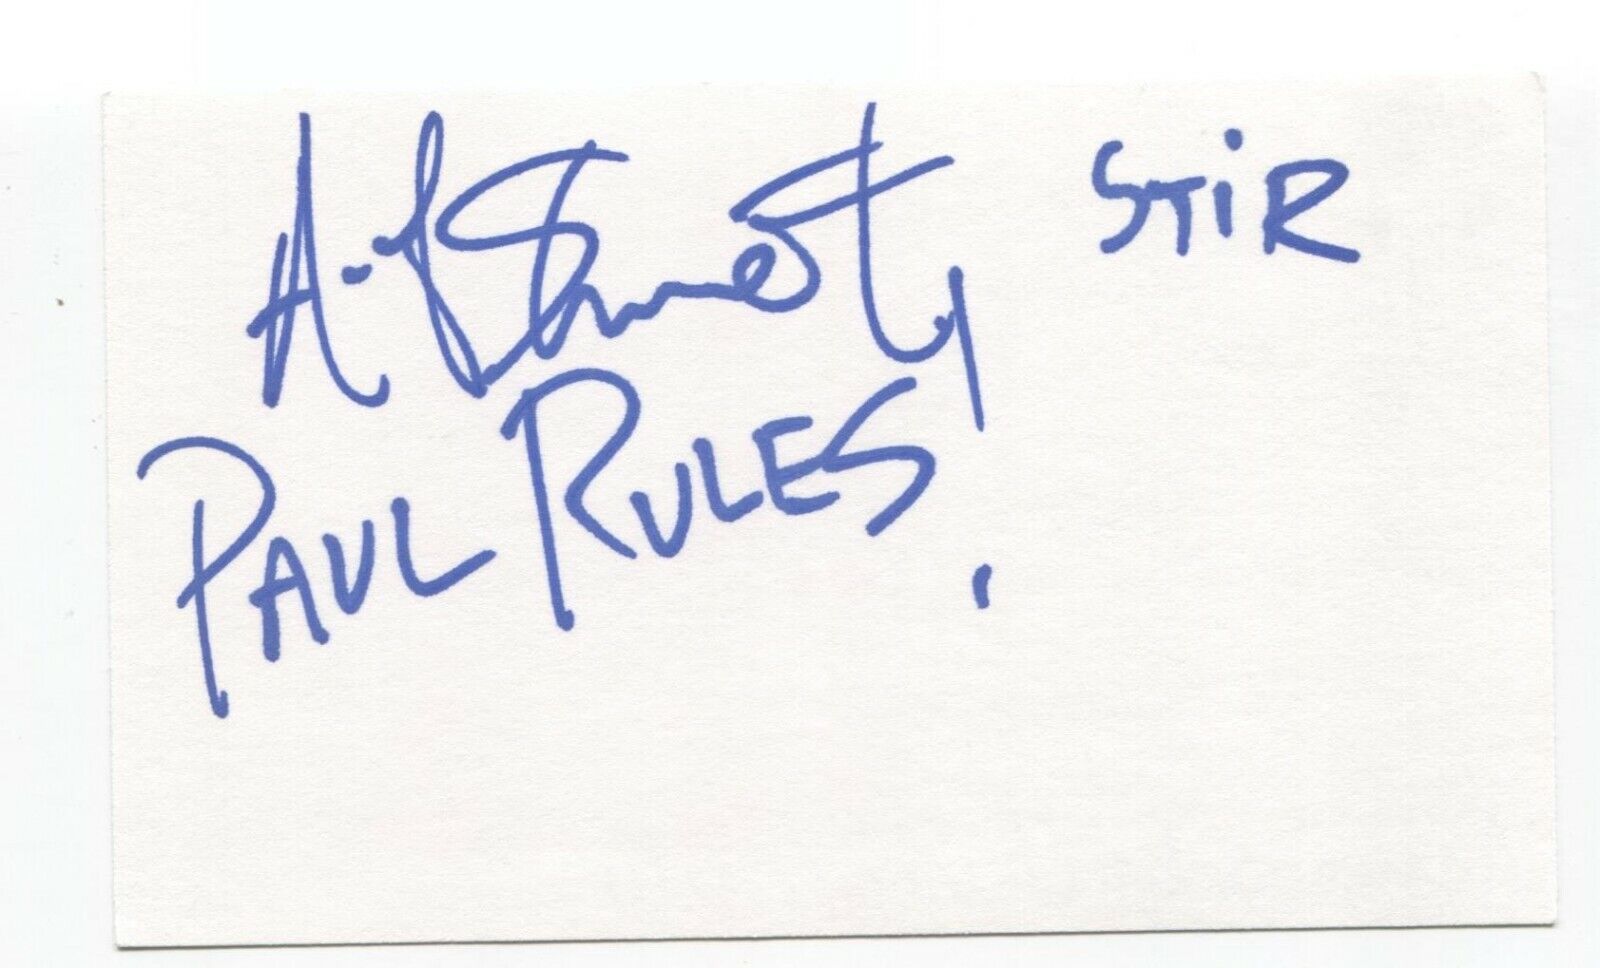 Stir - Andy Schmidt Signed 3x5 Index Card Autographed Signature Band